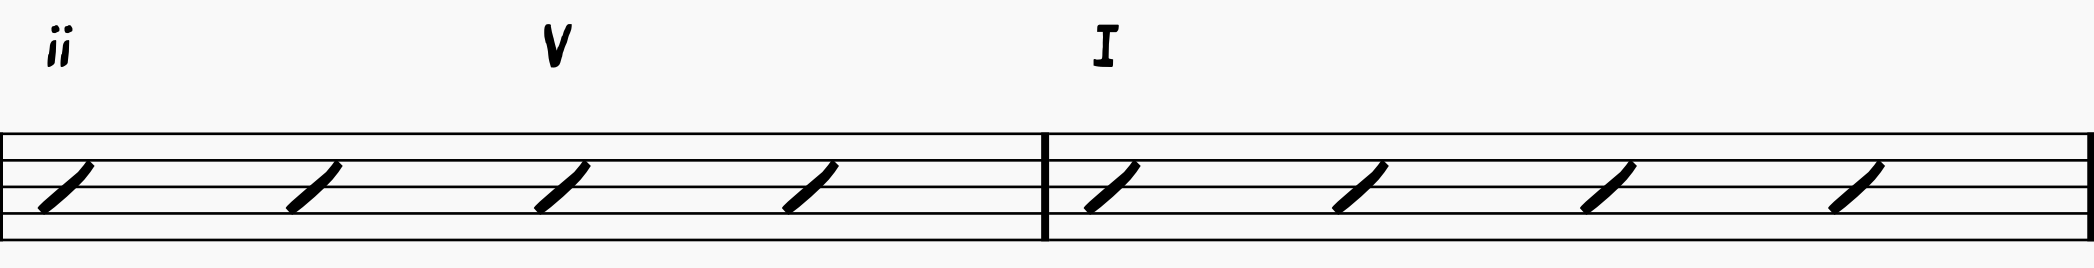 2-5-1 chord progression on the staff